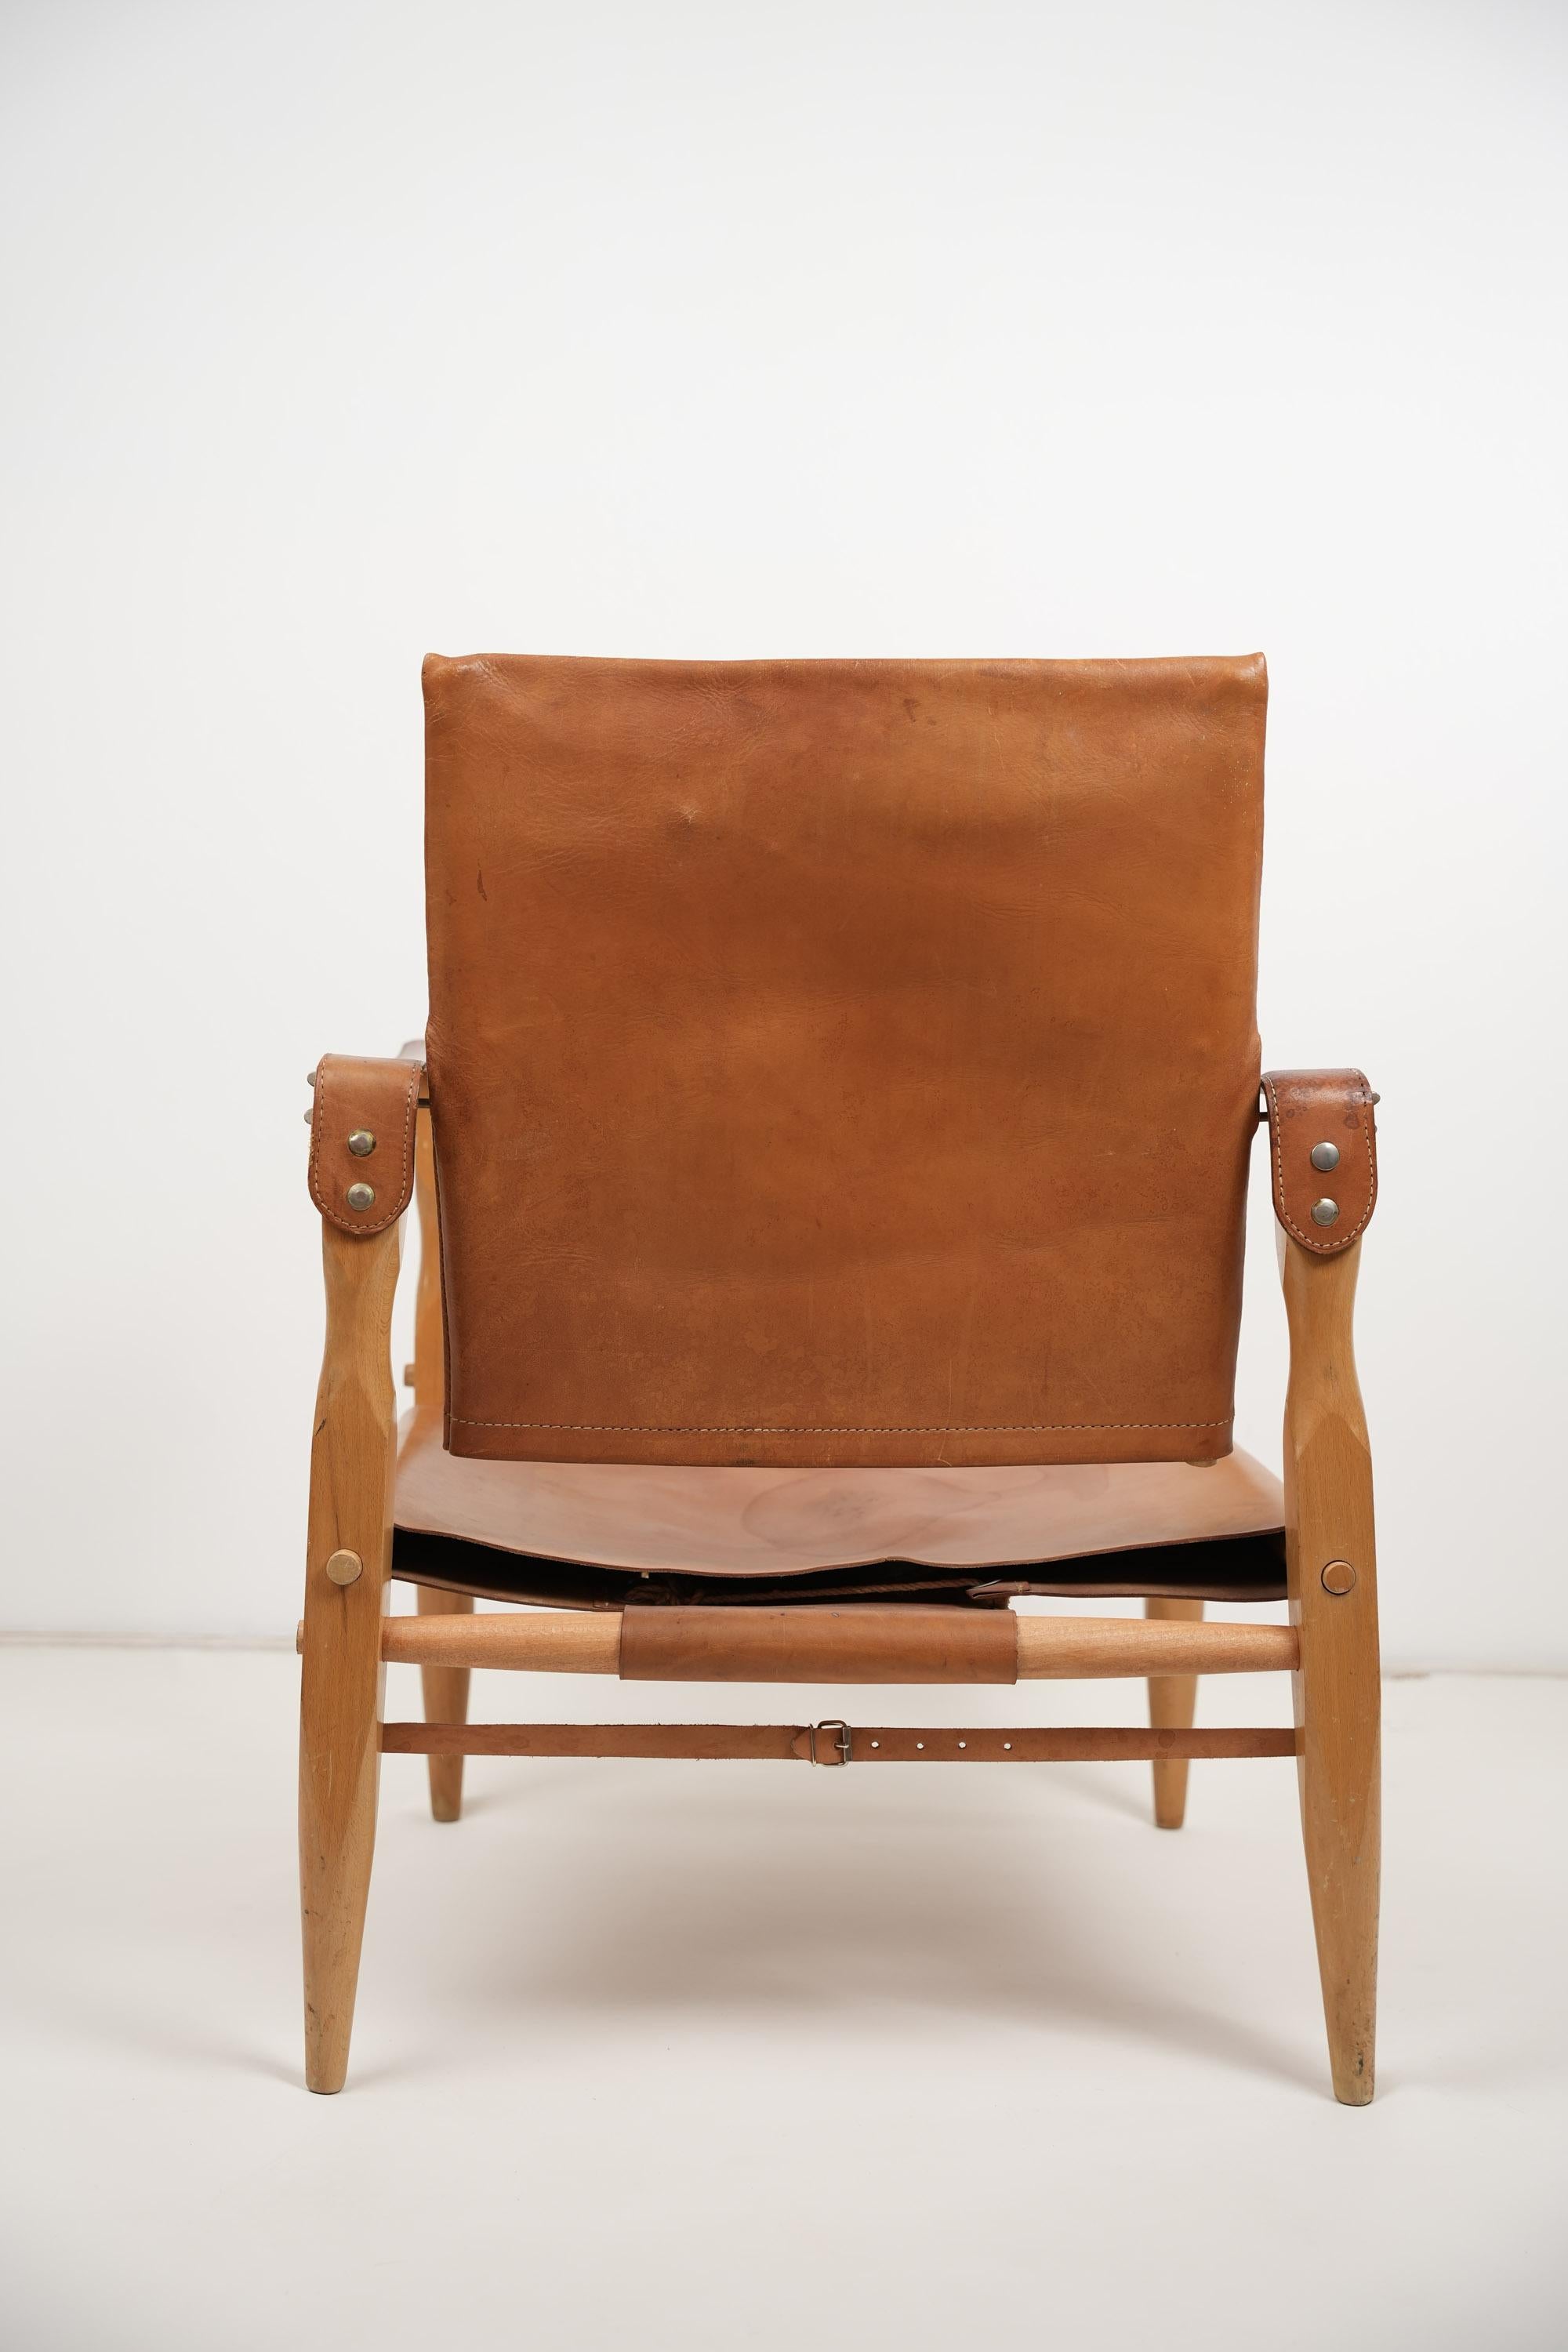 German Wilhelm Kienzle Leather Safari Chair 1950s For Sale